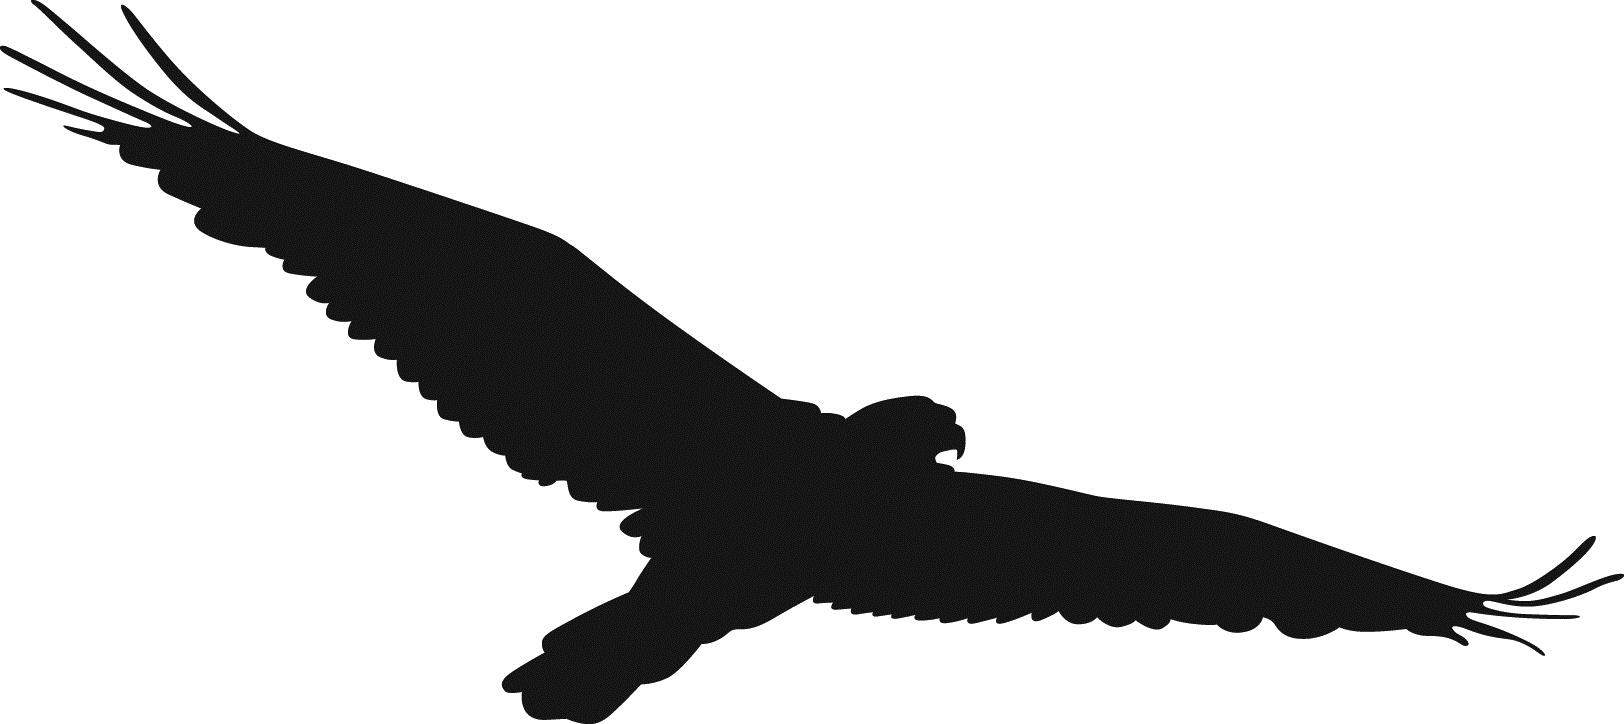 soaring eagle clipart black and white - photo #49